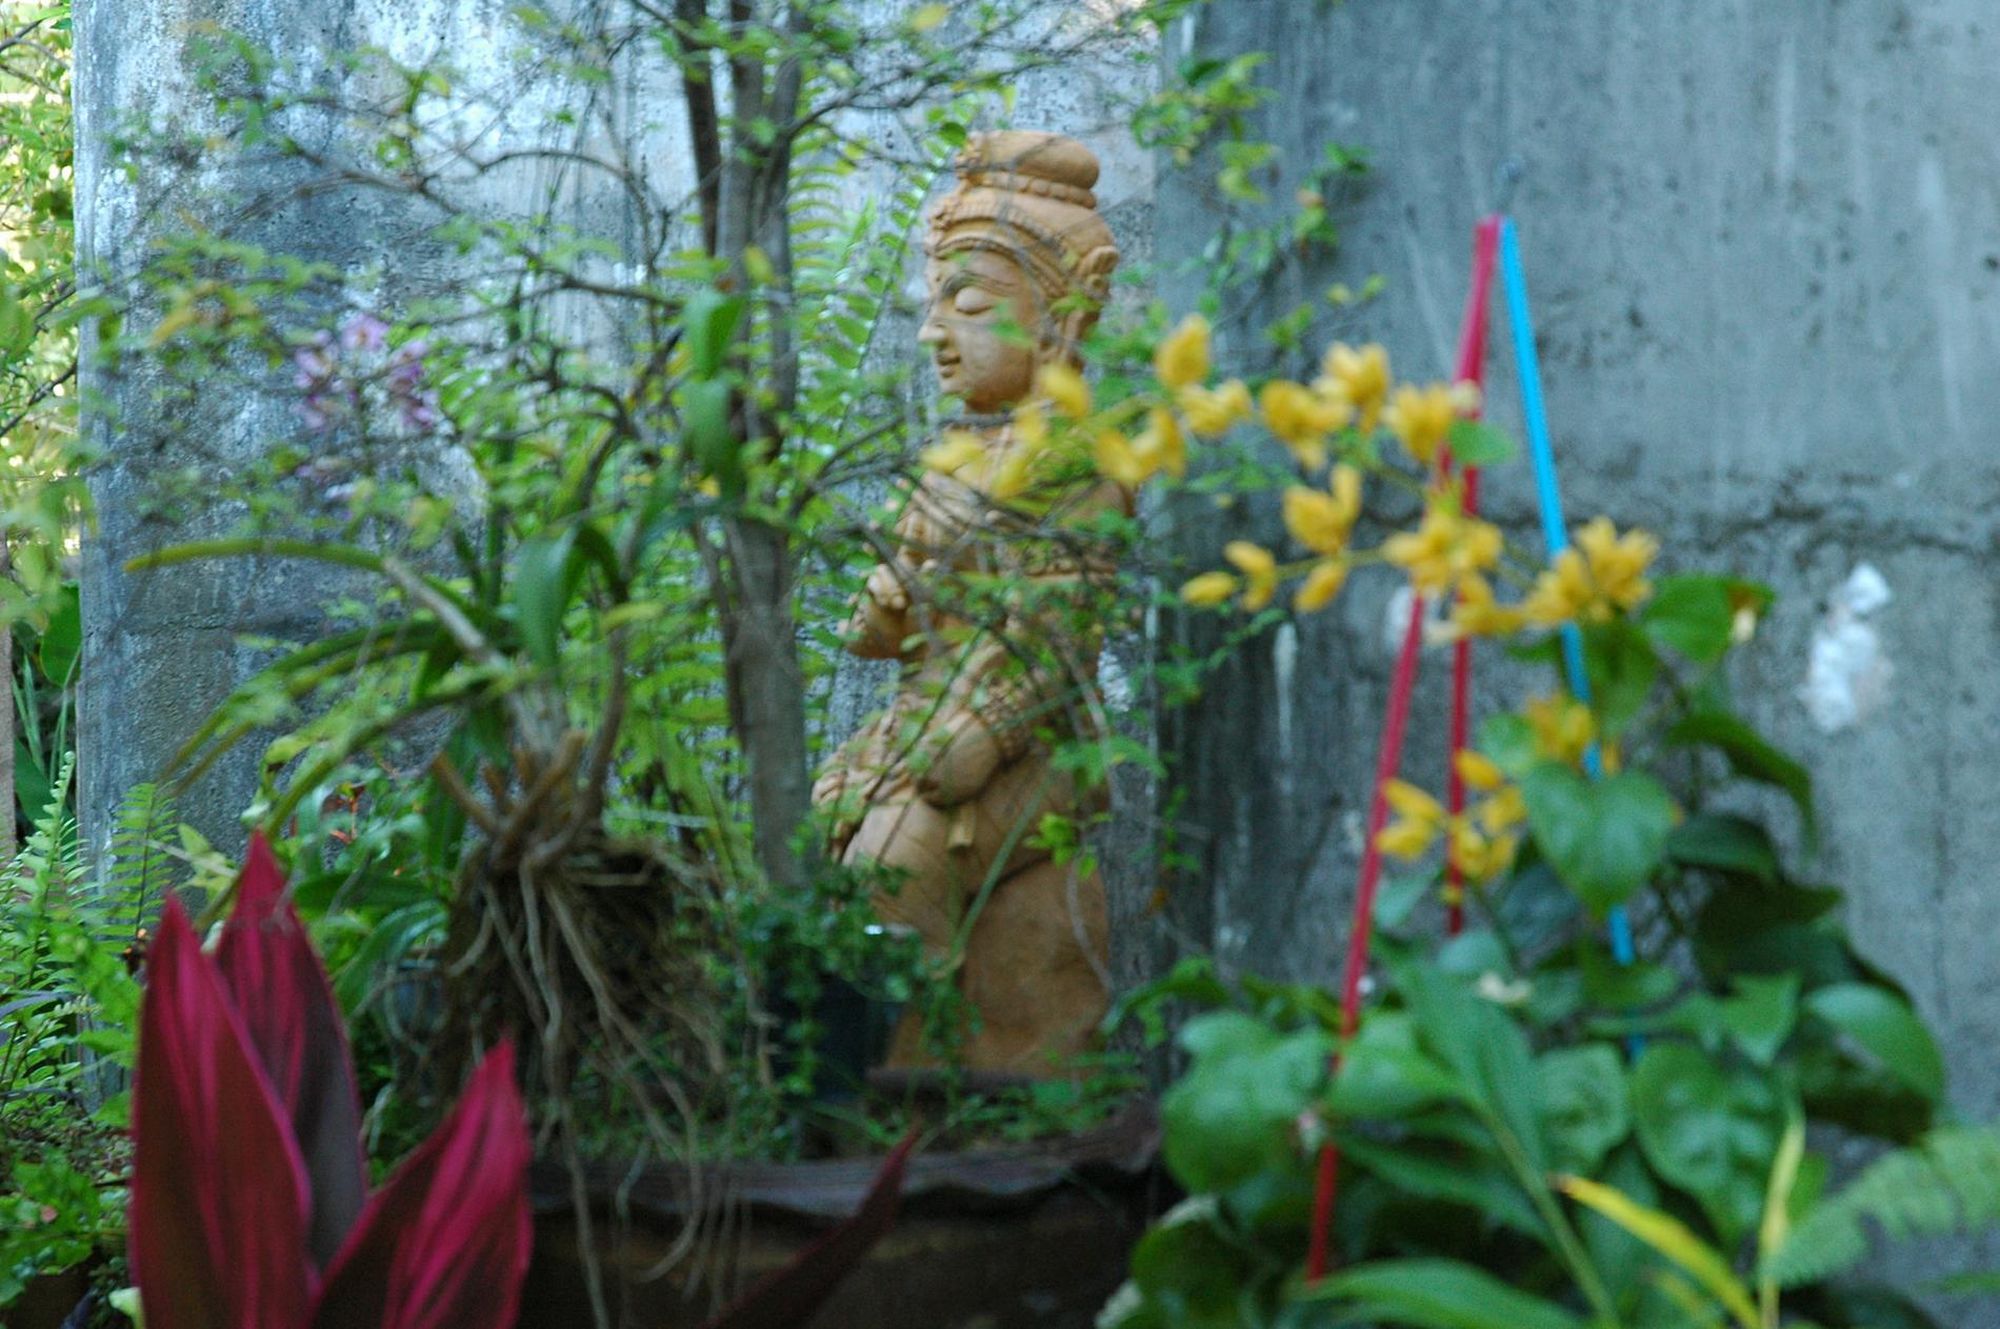 Flowers surrounding jungle temple.